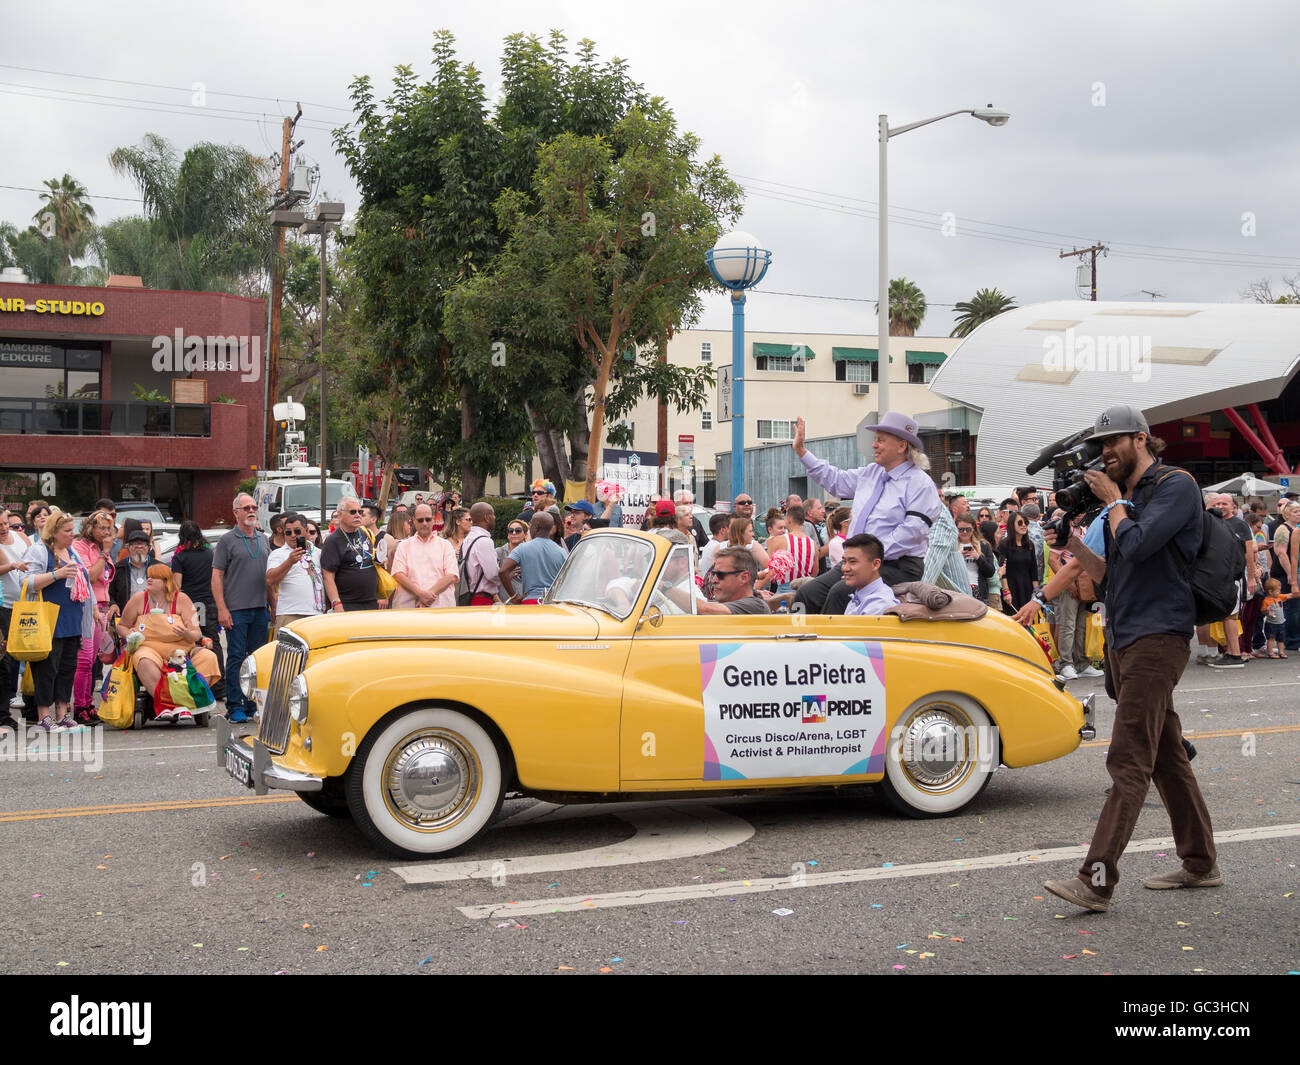 Gene LaPietra parading in a car during LA Pride Parade 2016 Stock Photo